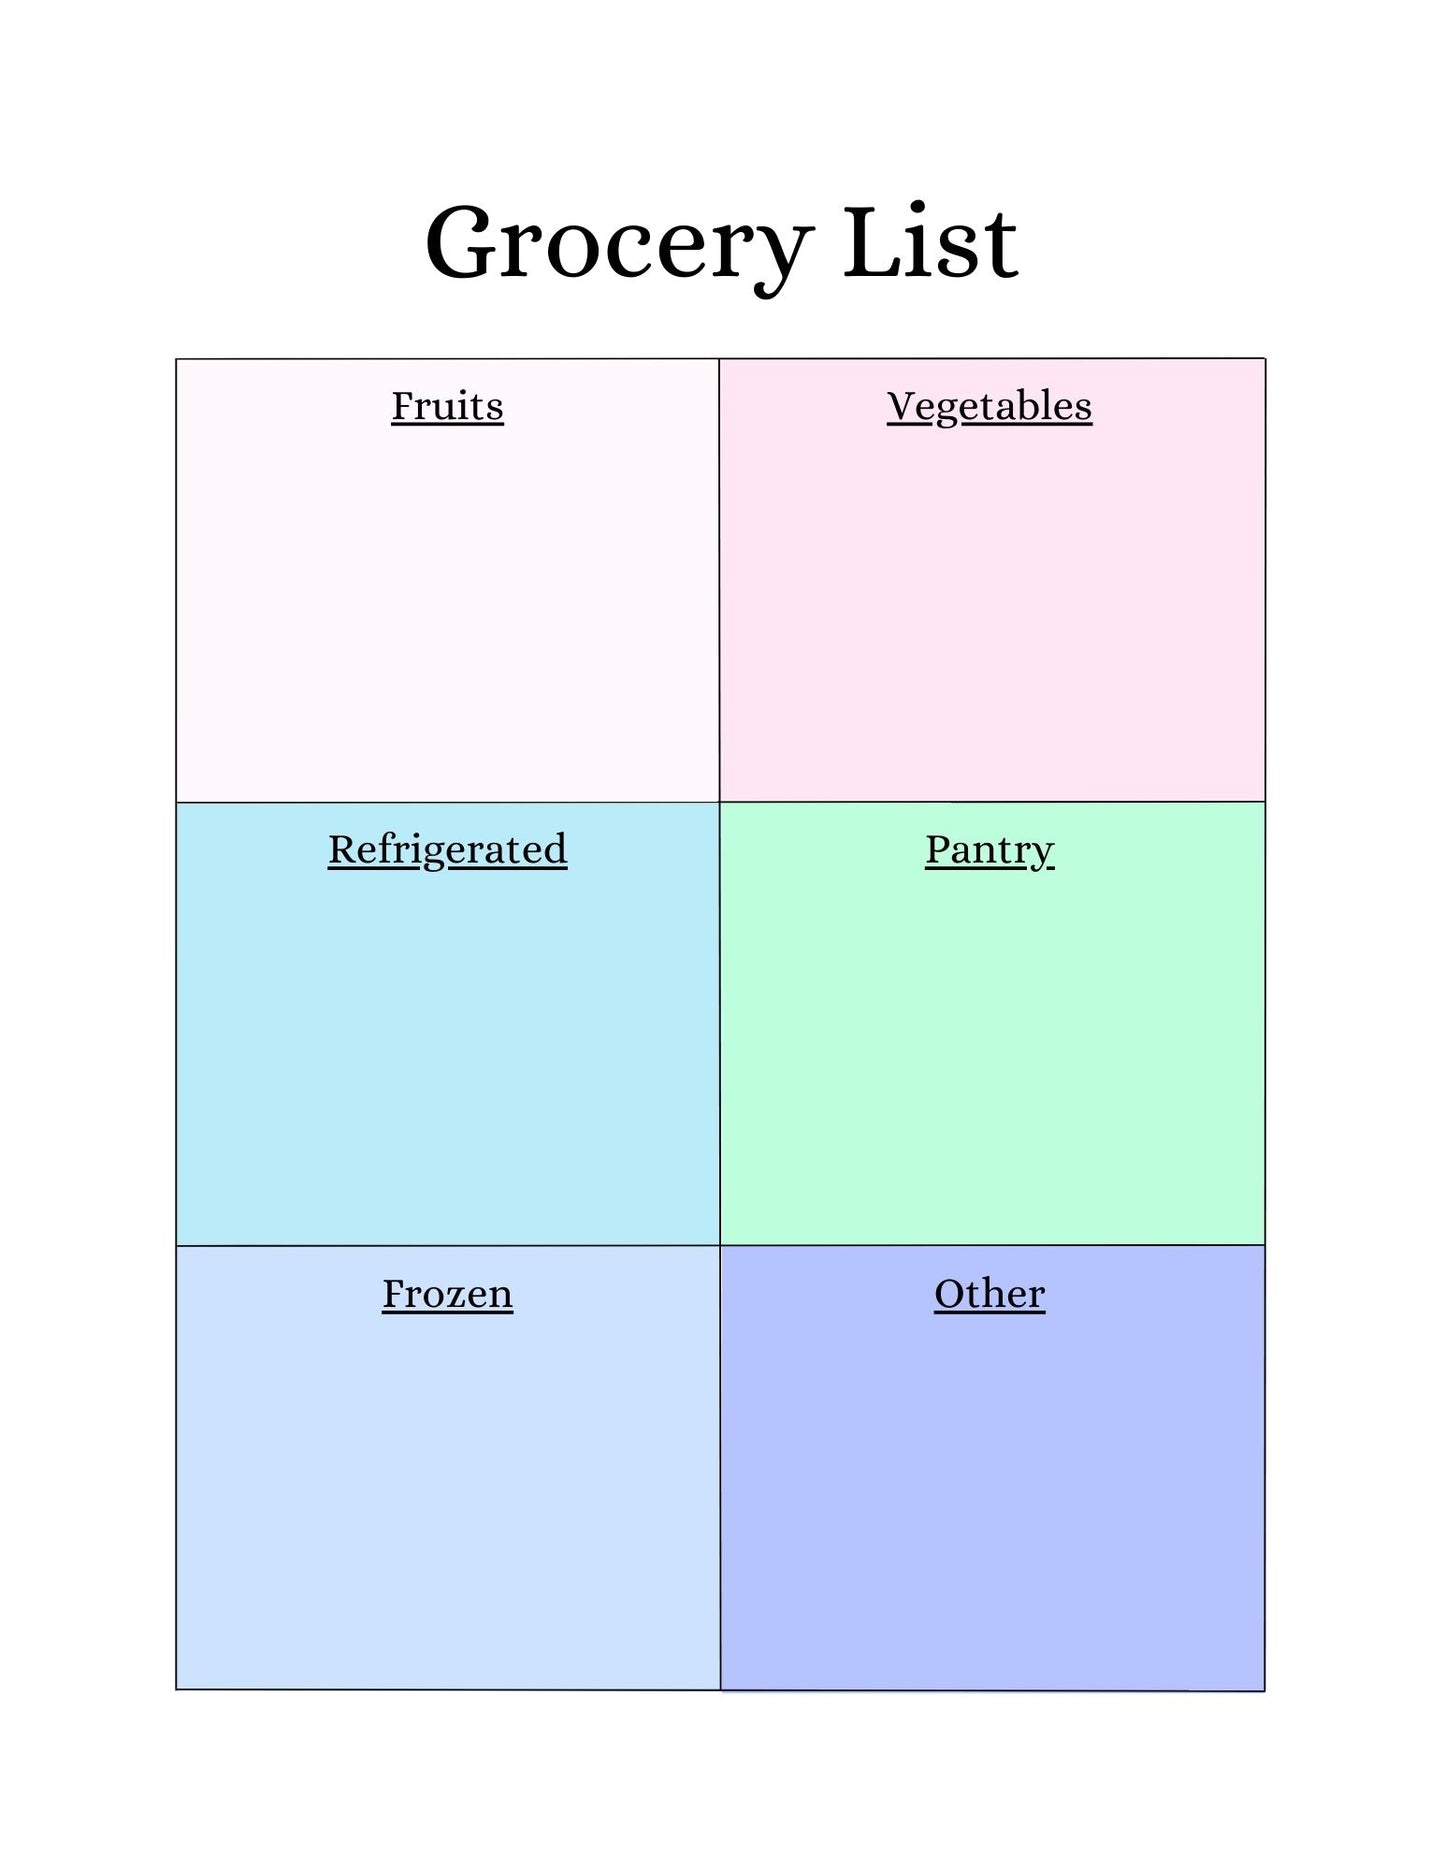 Meal Planning Simplified eBook